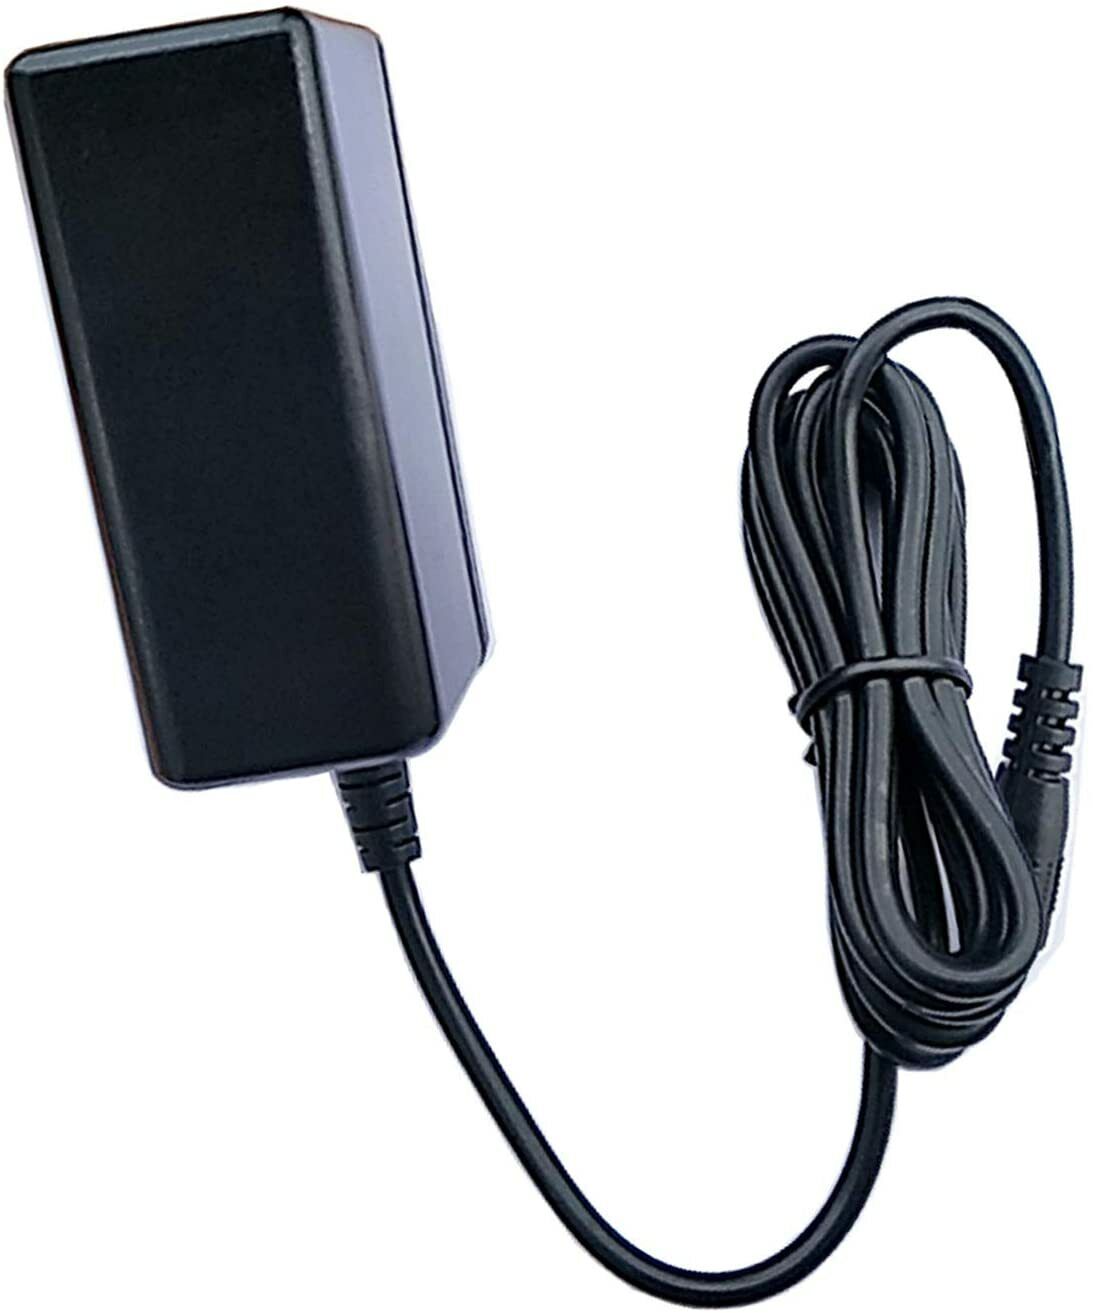 AC Adapter For Sony Discman D-E226CK Car Ready Portable CD Walkman DE226CK Power